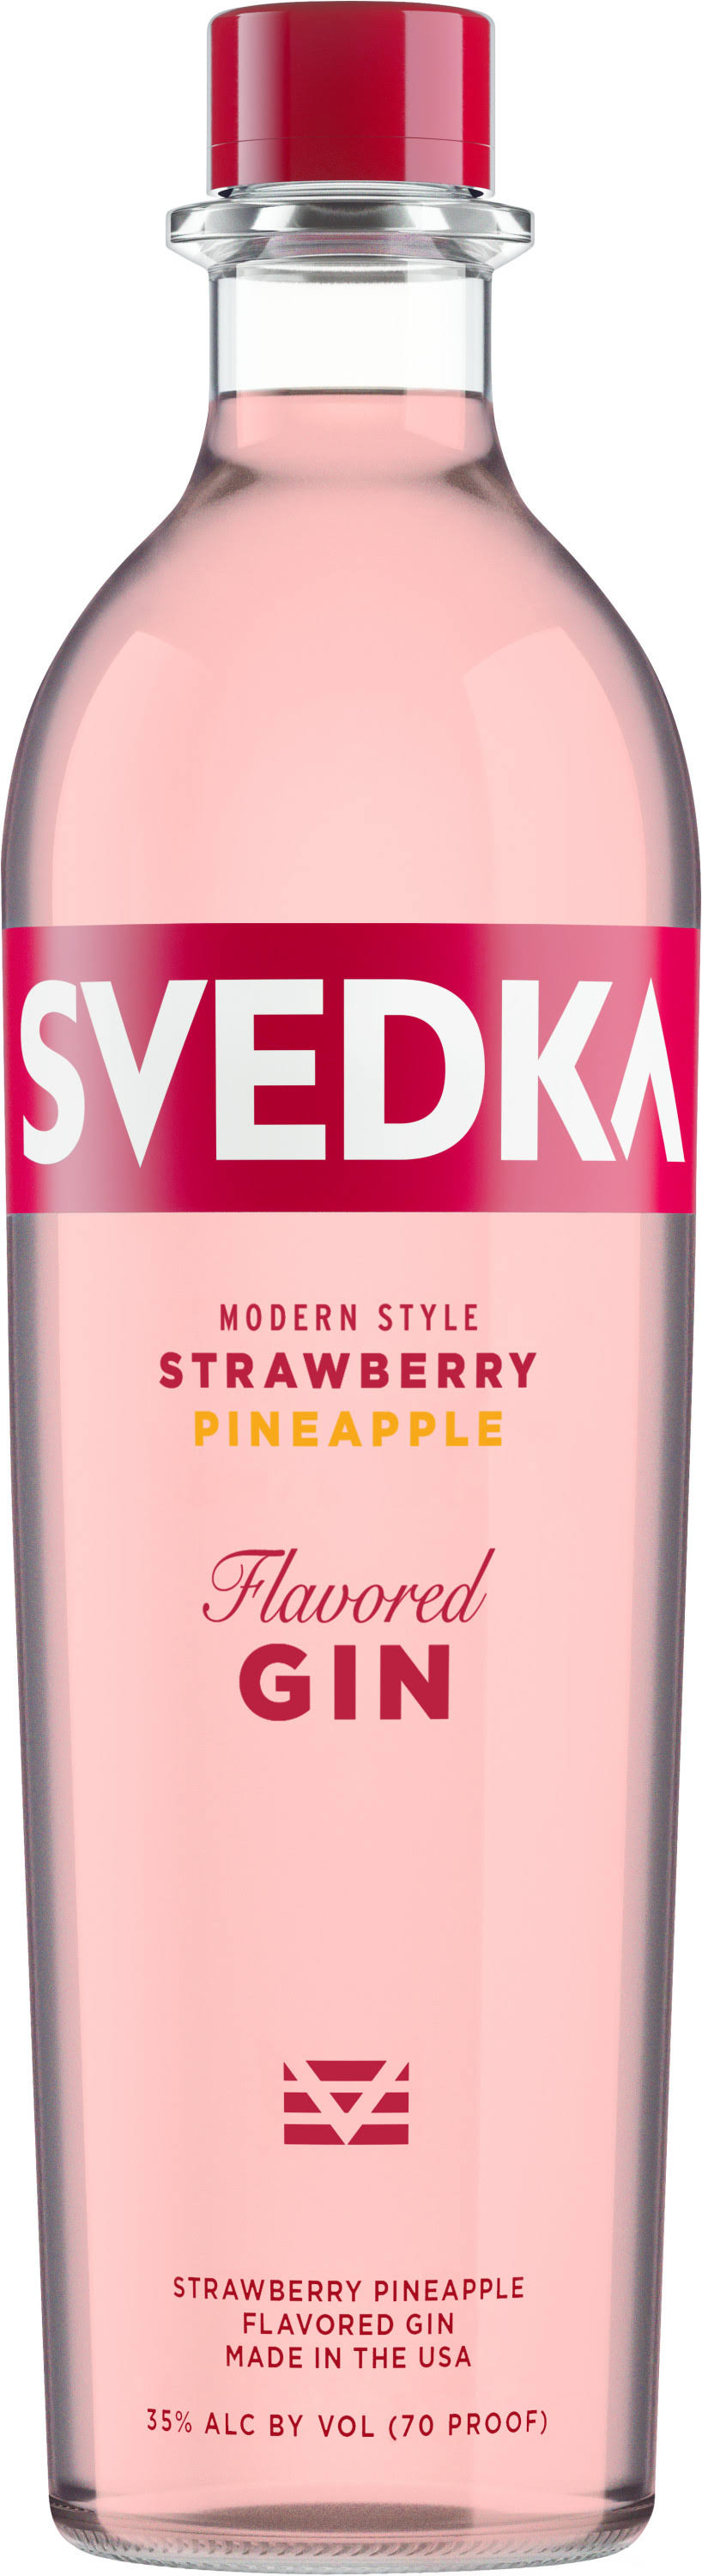 Svedka Strawberry Pineapple Modern Style Gin - 750 ml